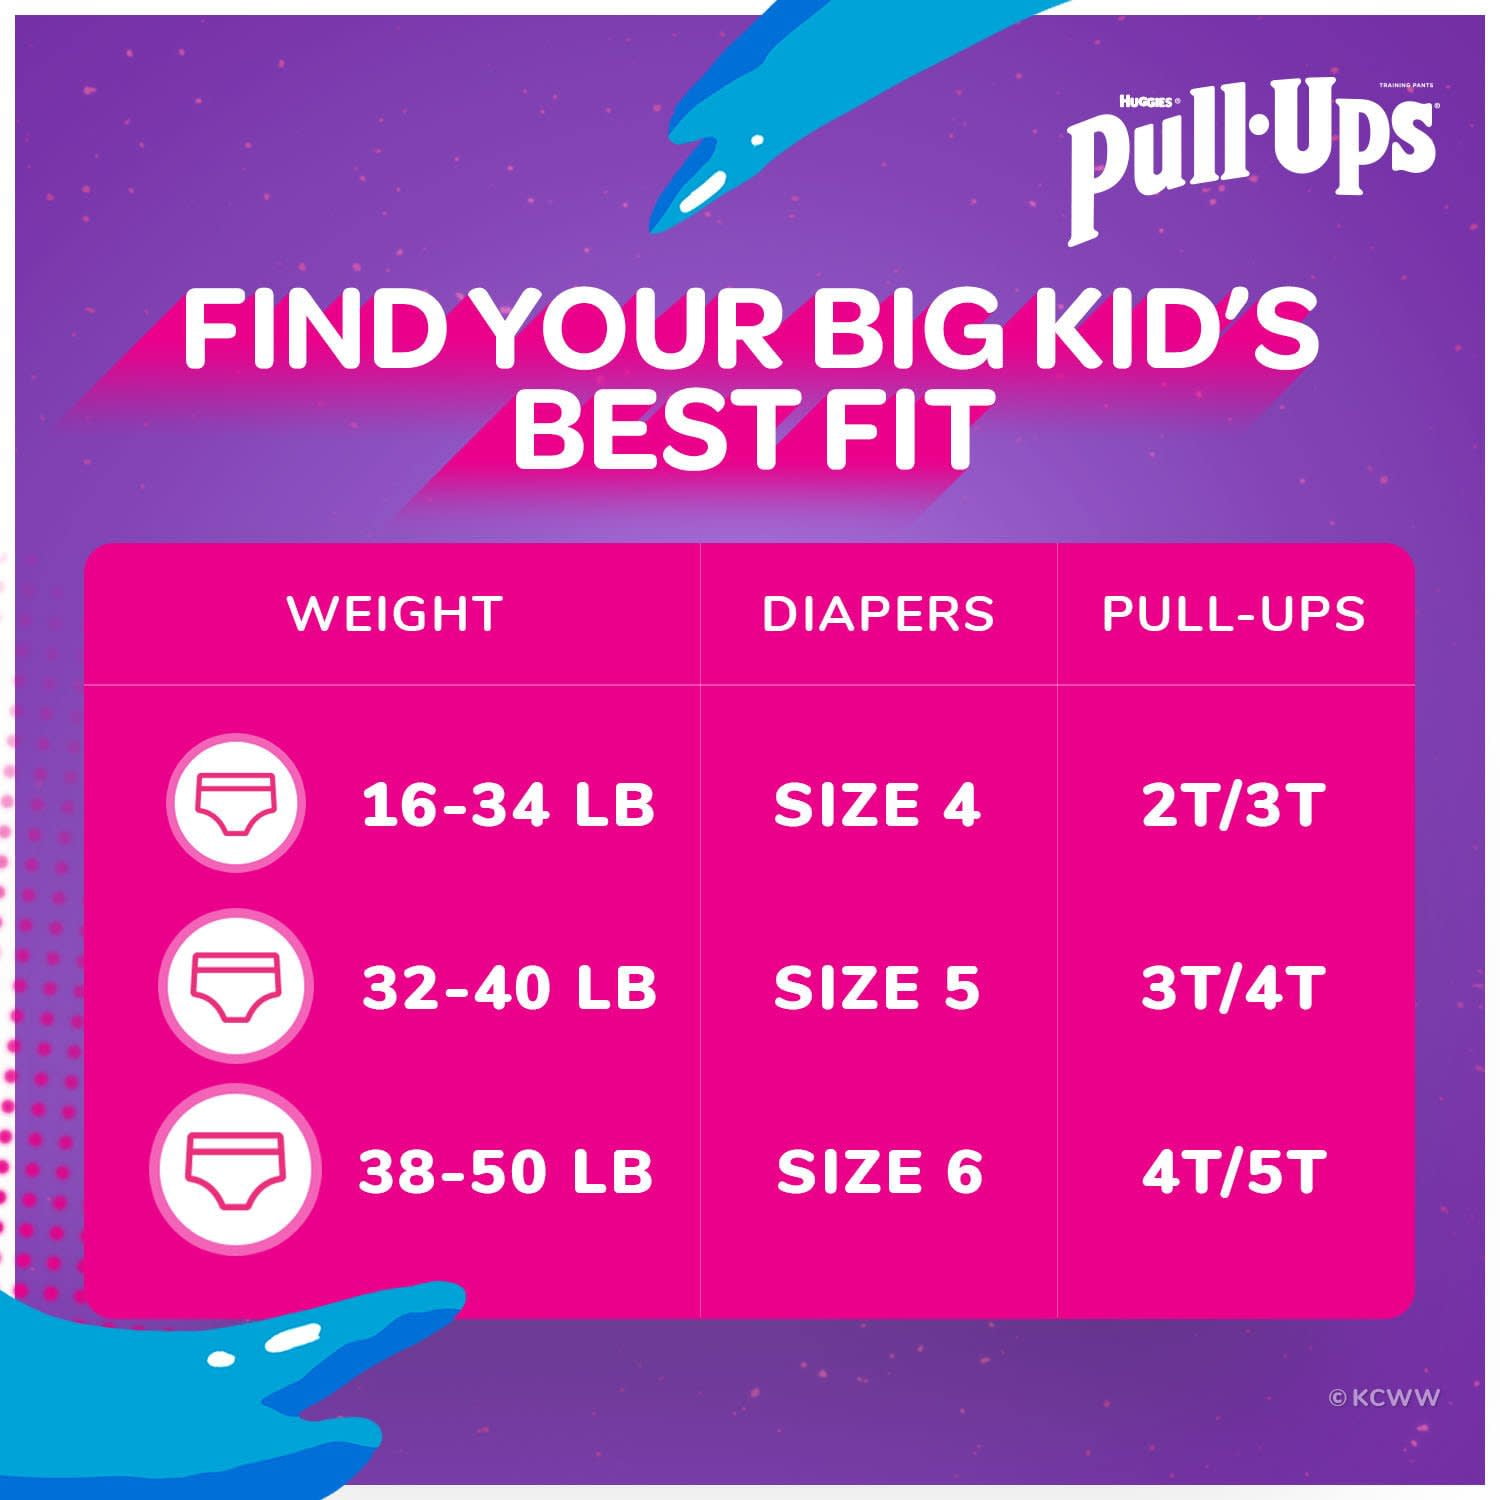 Pull-Ups Girls' Potty Training Underwear Size 5, 3T-4T, 112 Ct 